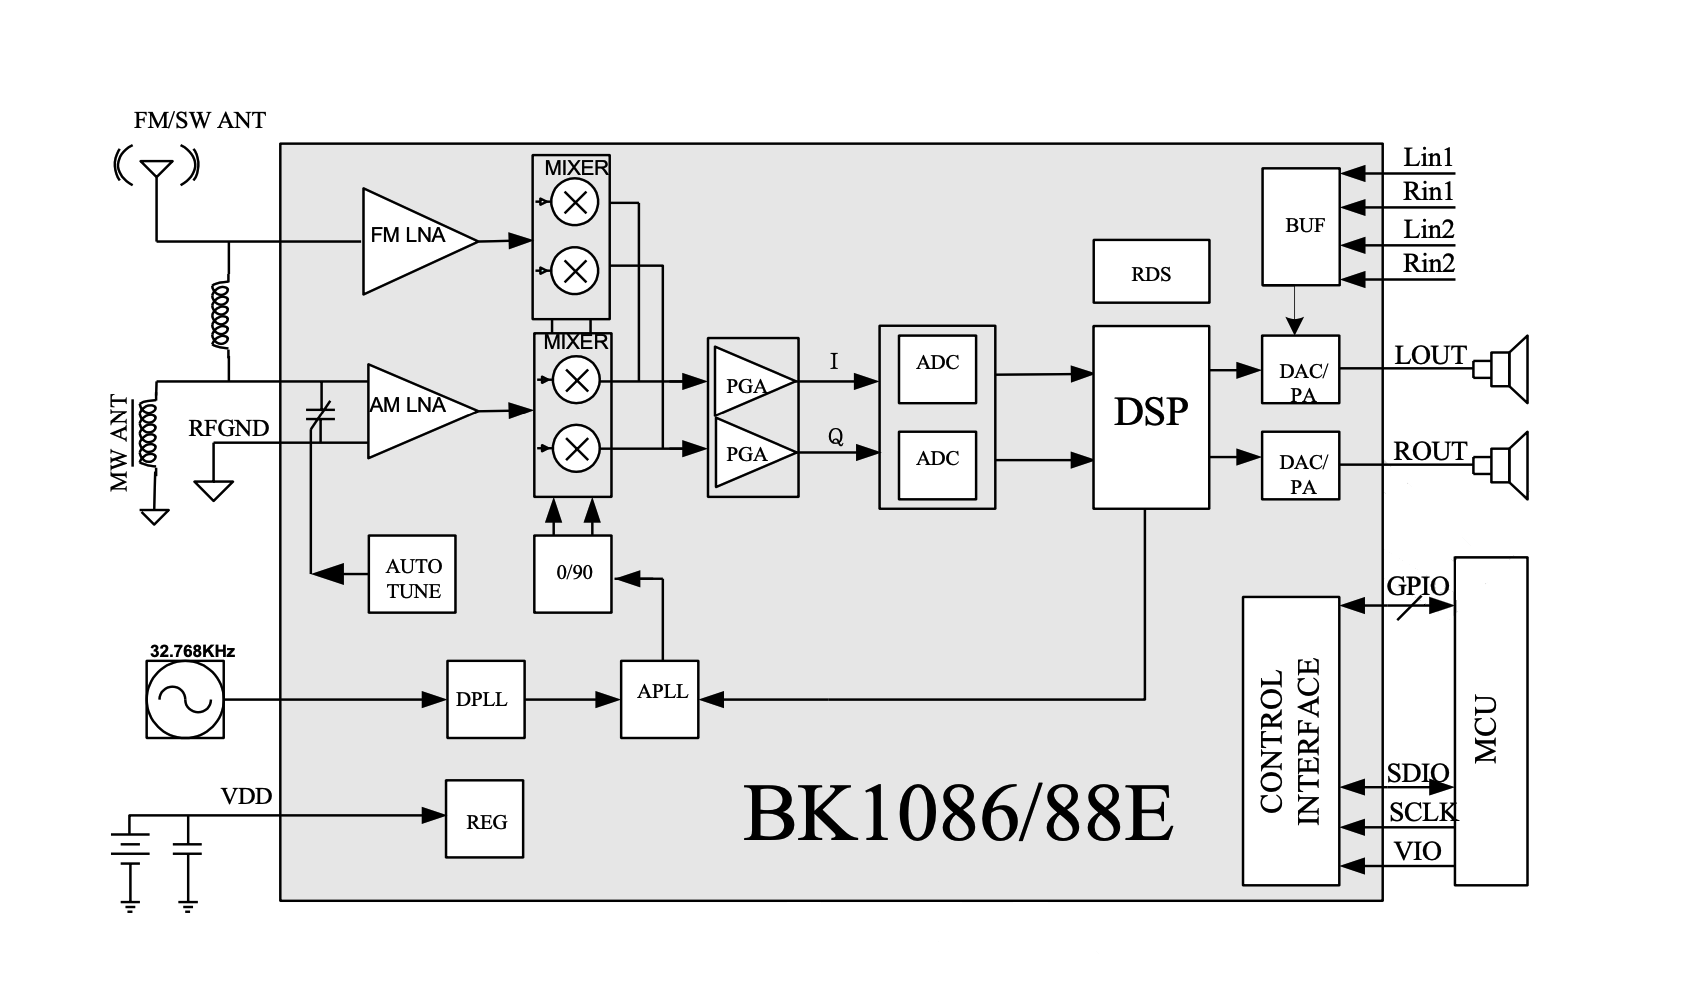 BK1086/88E Functional Description